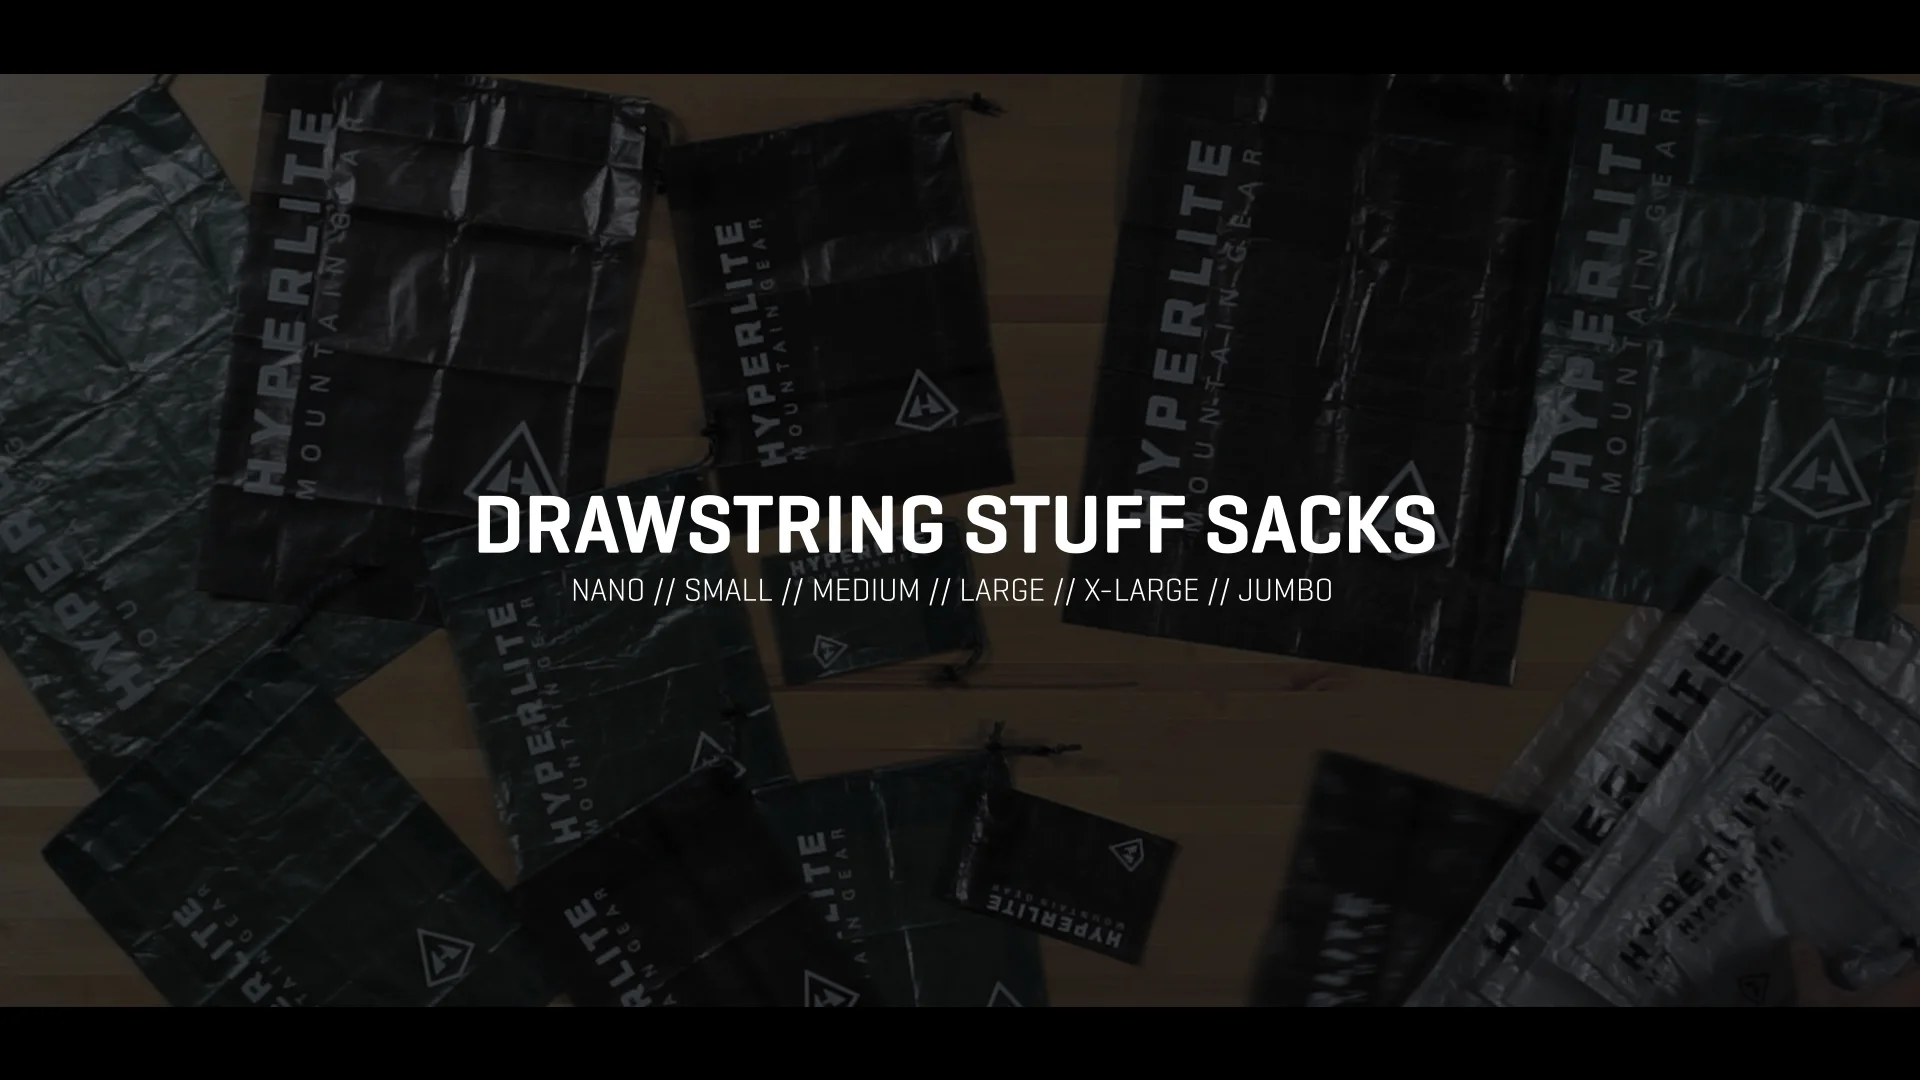 Drawstring Stuff Sacks